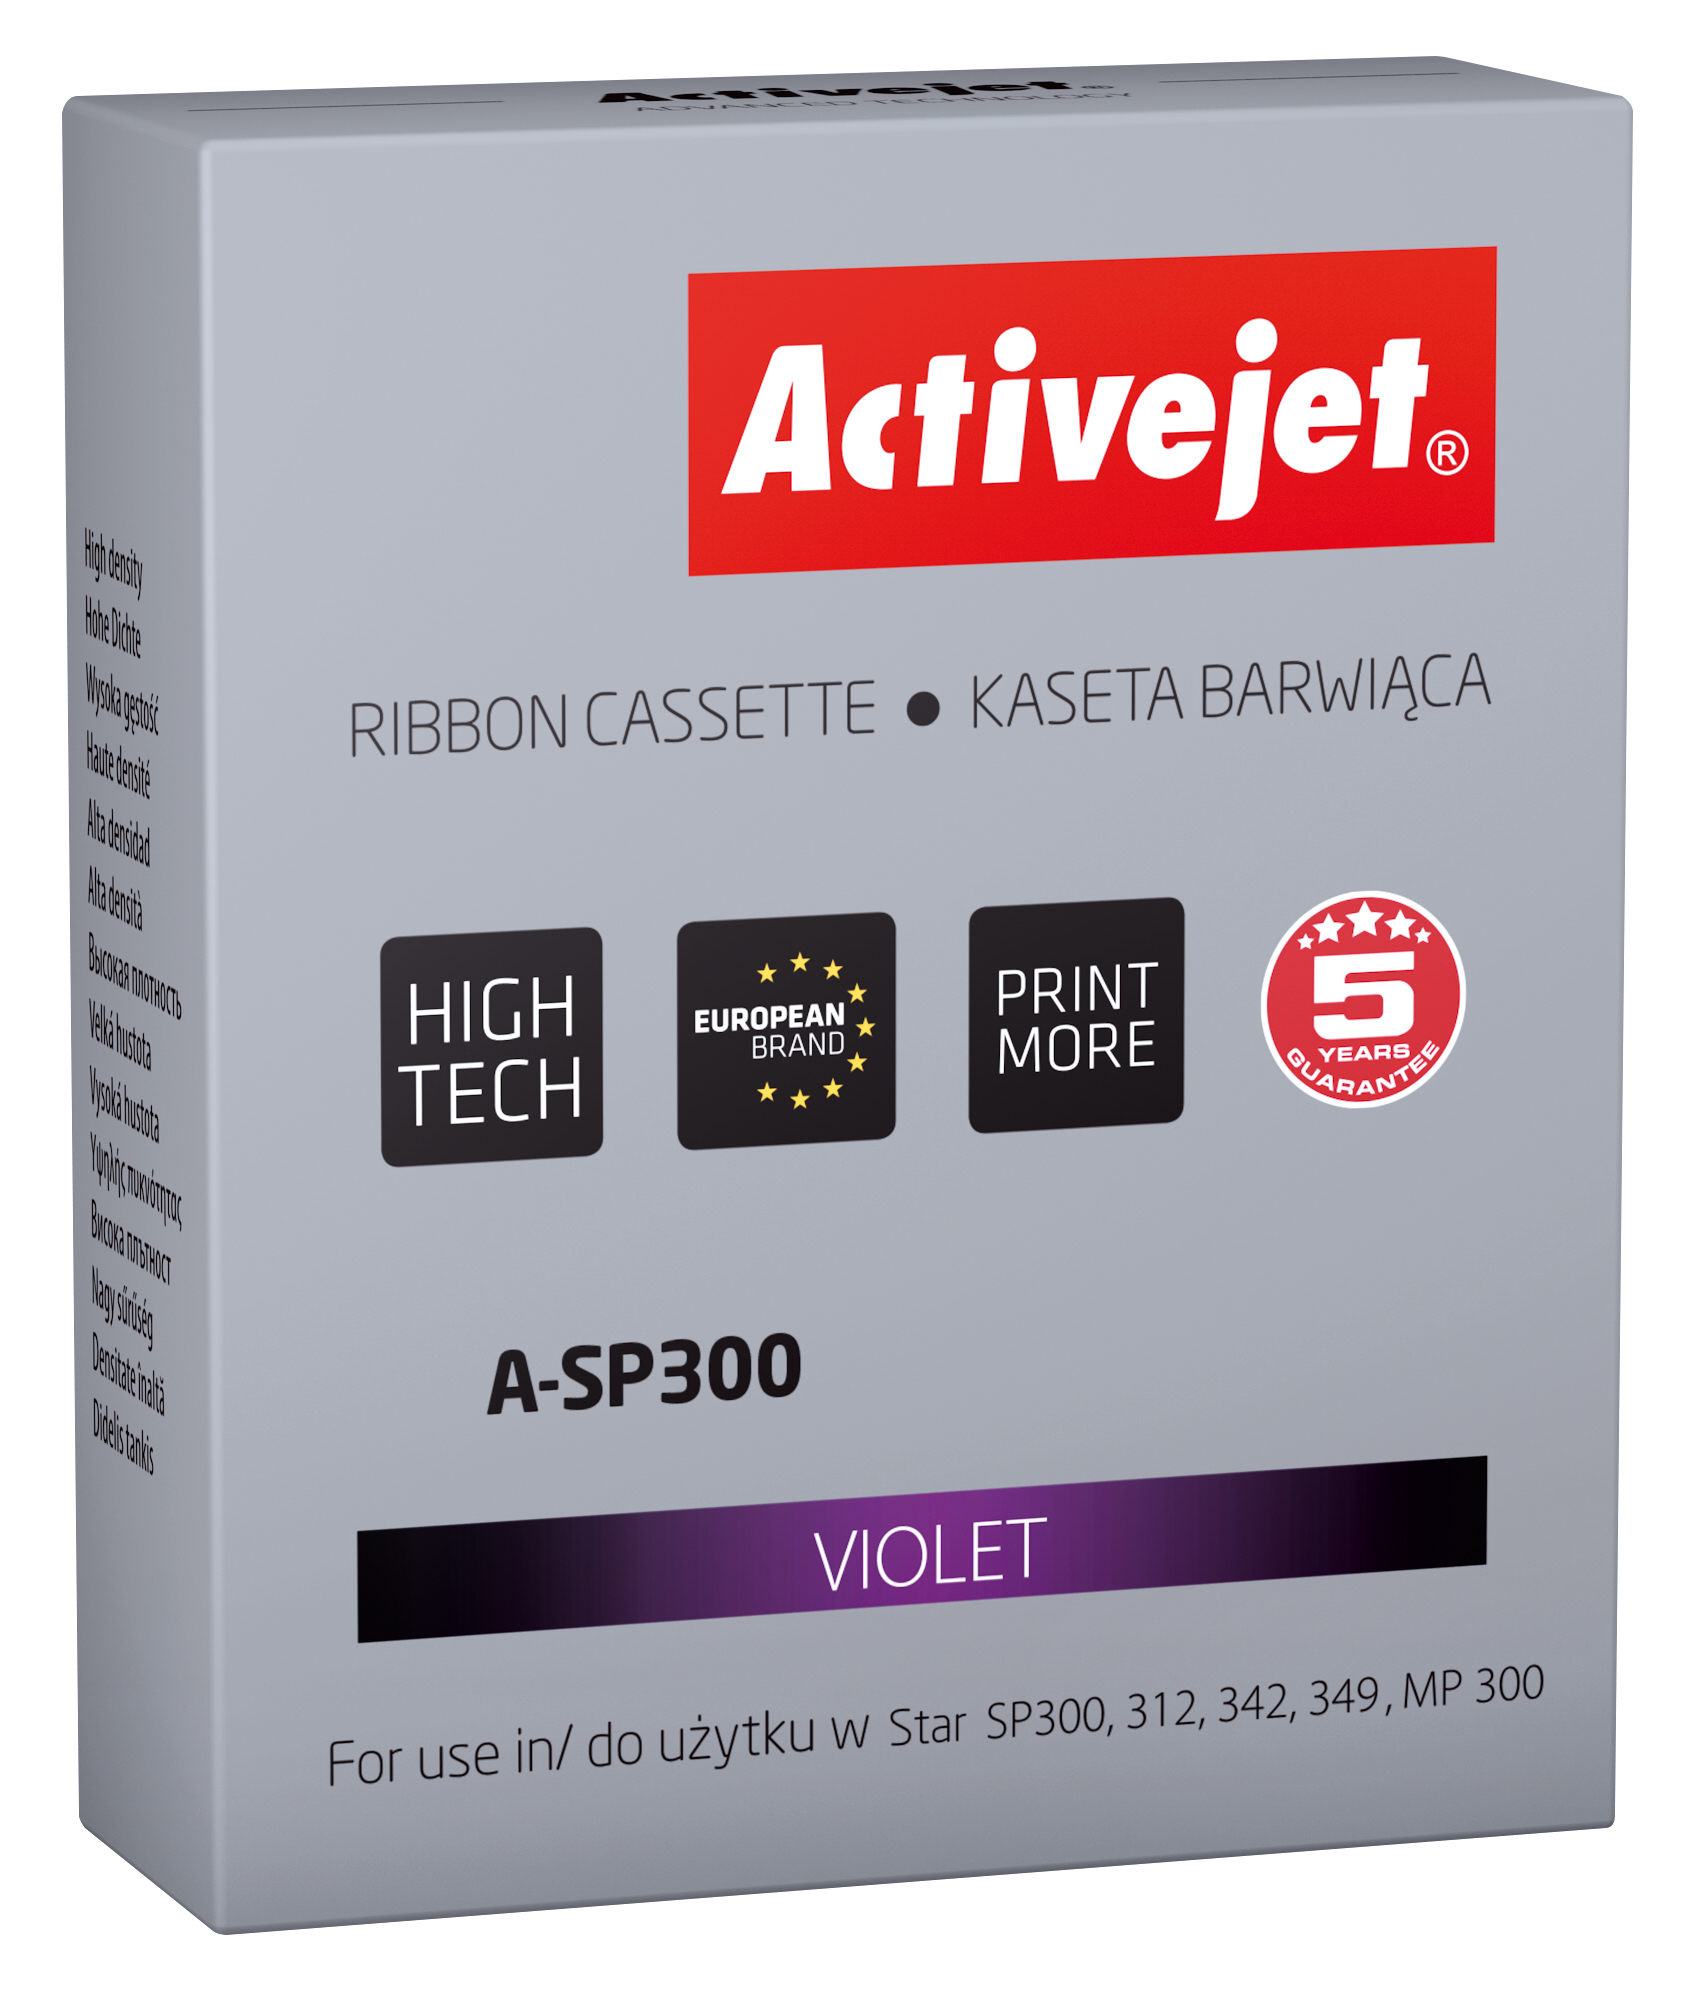 ActiveJet ATB-1090N toner voor brother printer; Brother TN-1090 vervanging; Opperste; 1500 pagina's; zwart.